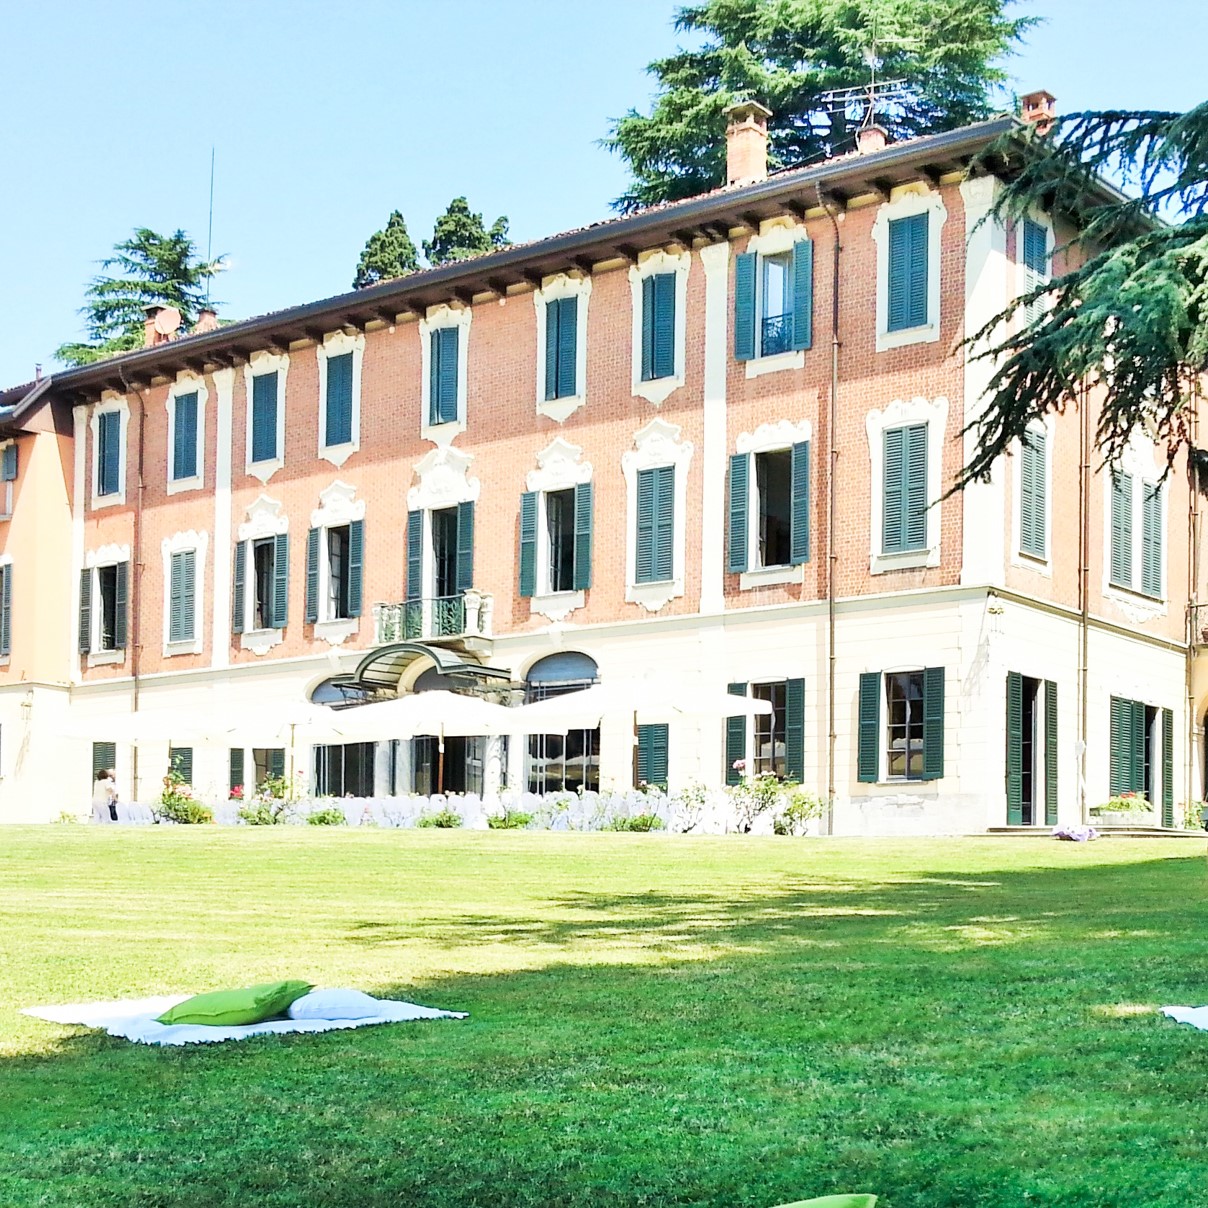 Villa Pizzi vista esternamente